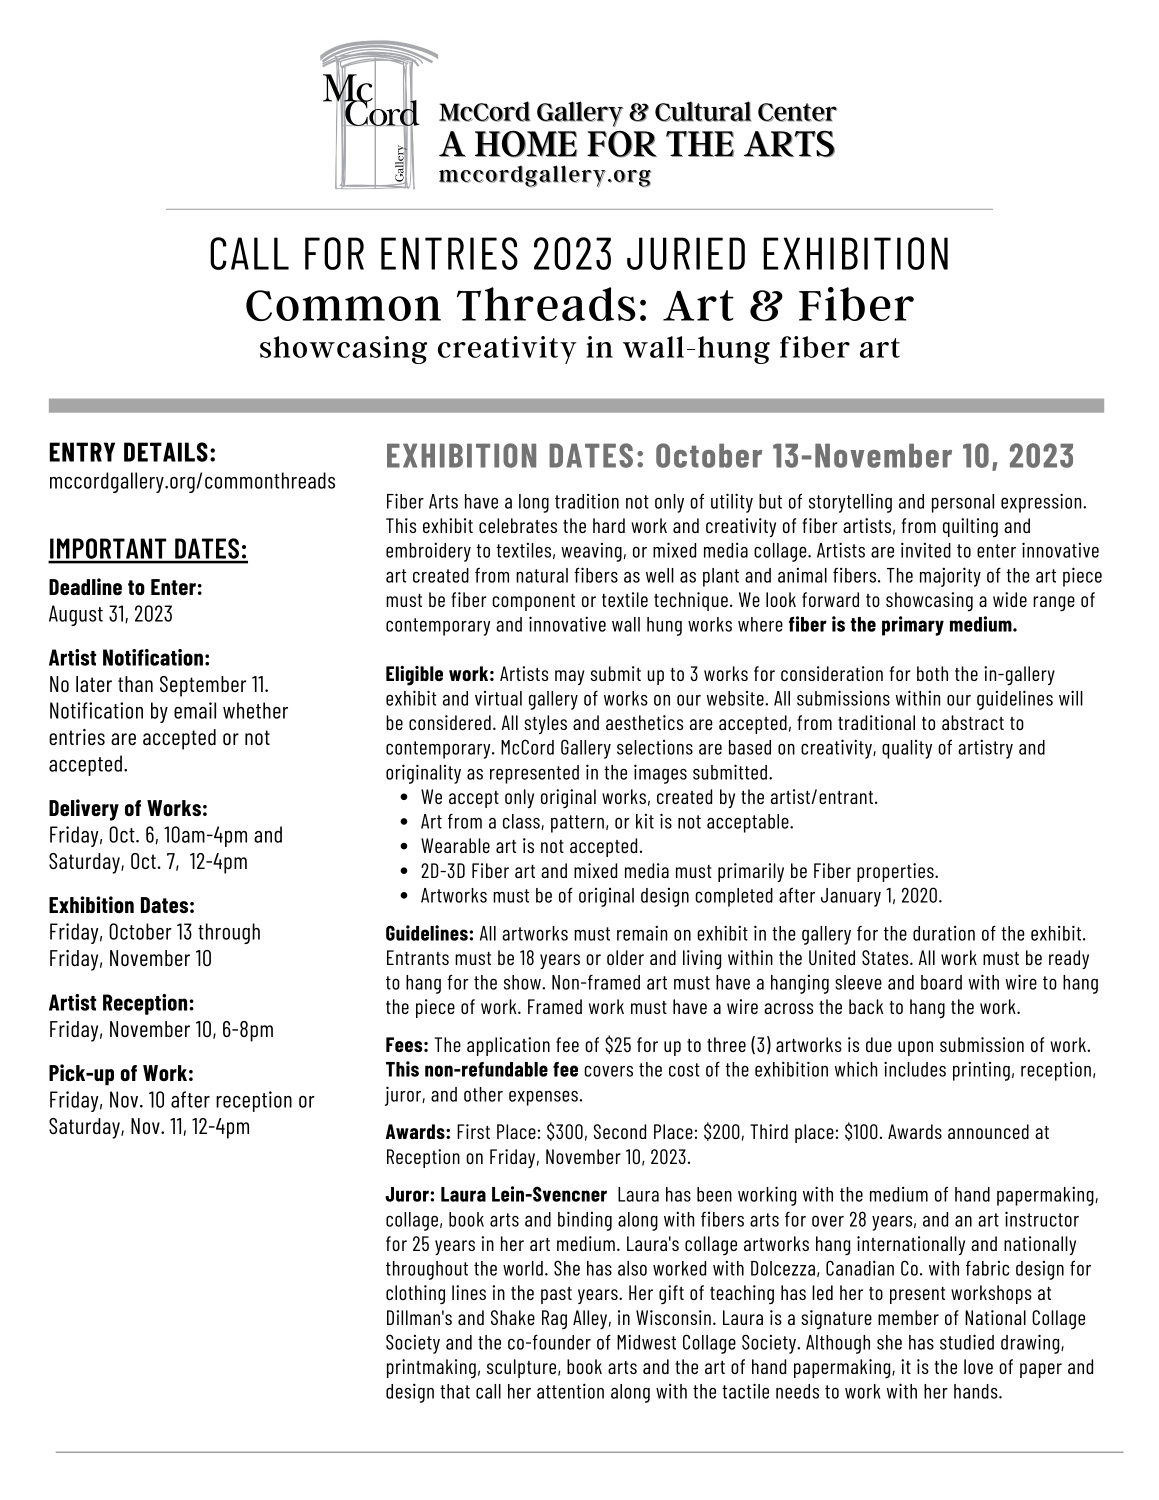 Call for Entries Common Threads Art & Fiber Palos Park/Chicagoland